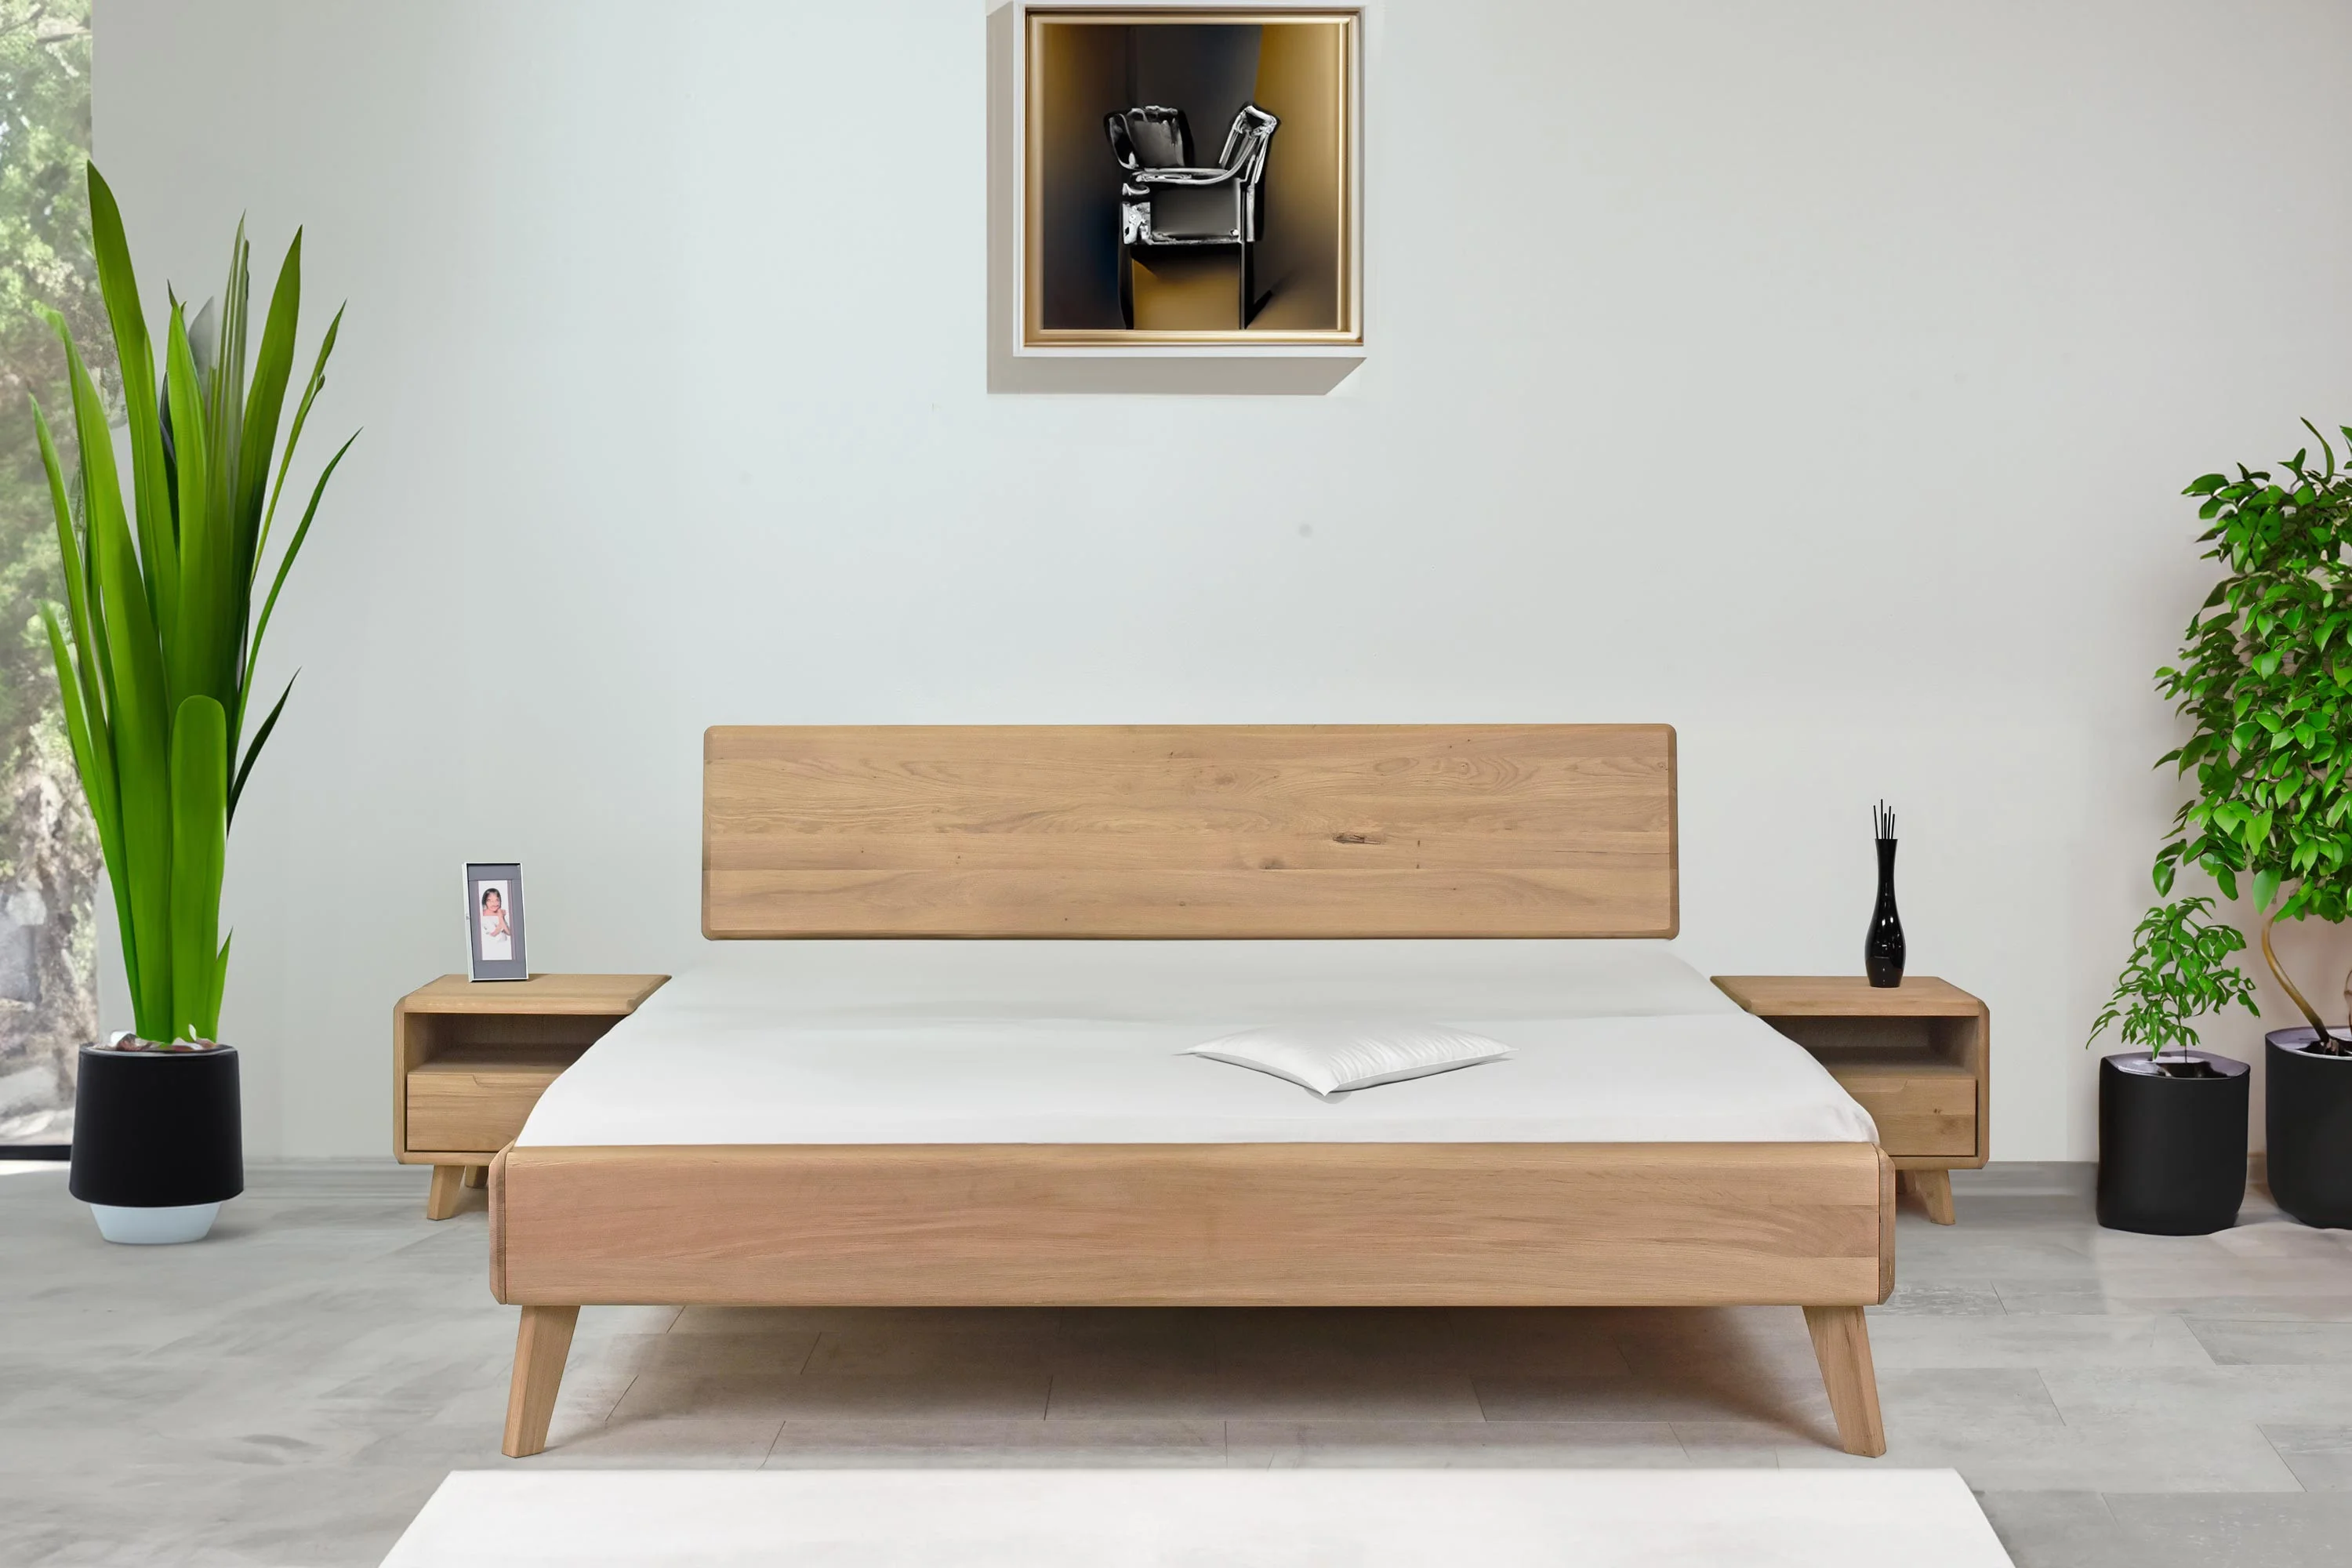 Manželská posteľ Bratislava 180 x 200 vyrobená z dubu 